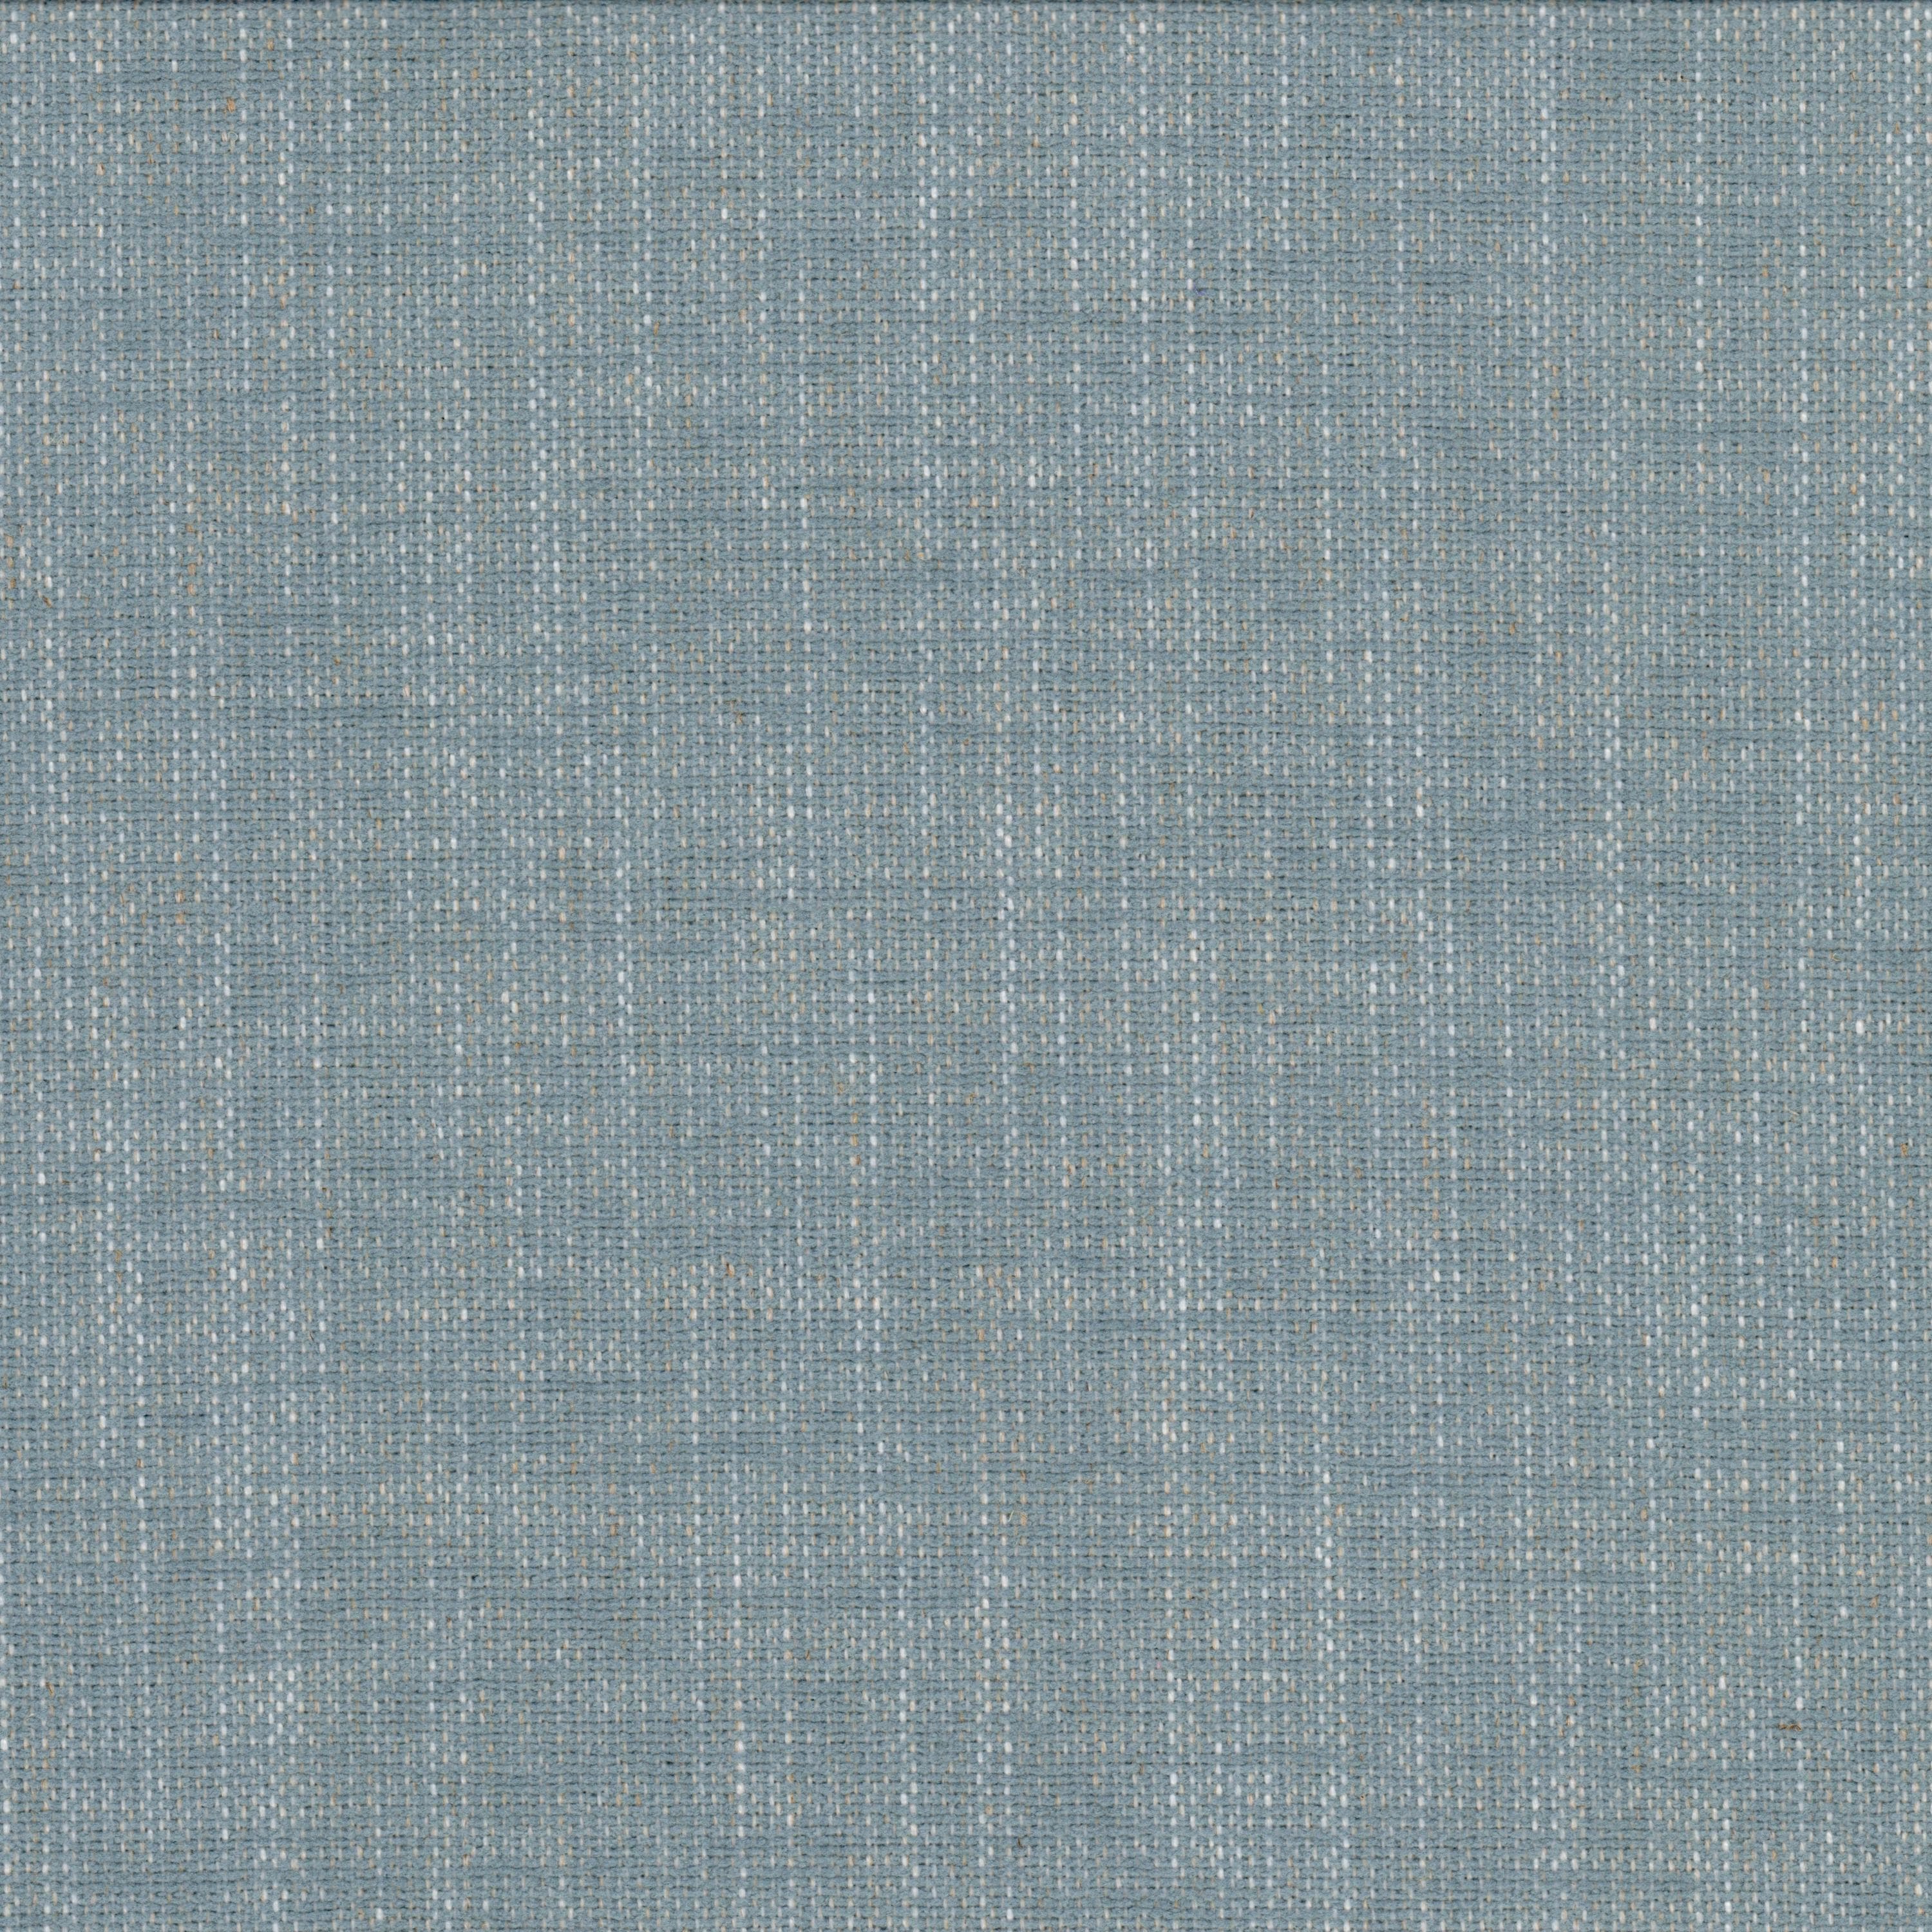 Polenta 4 Blue by Stout Fabric